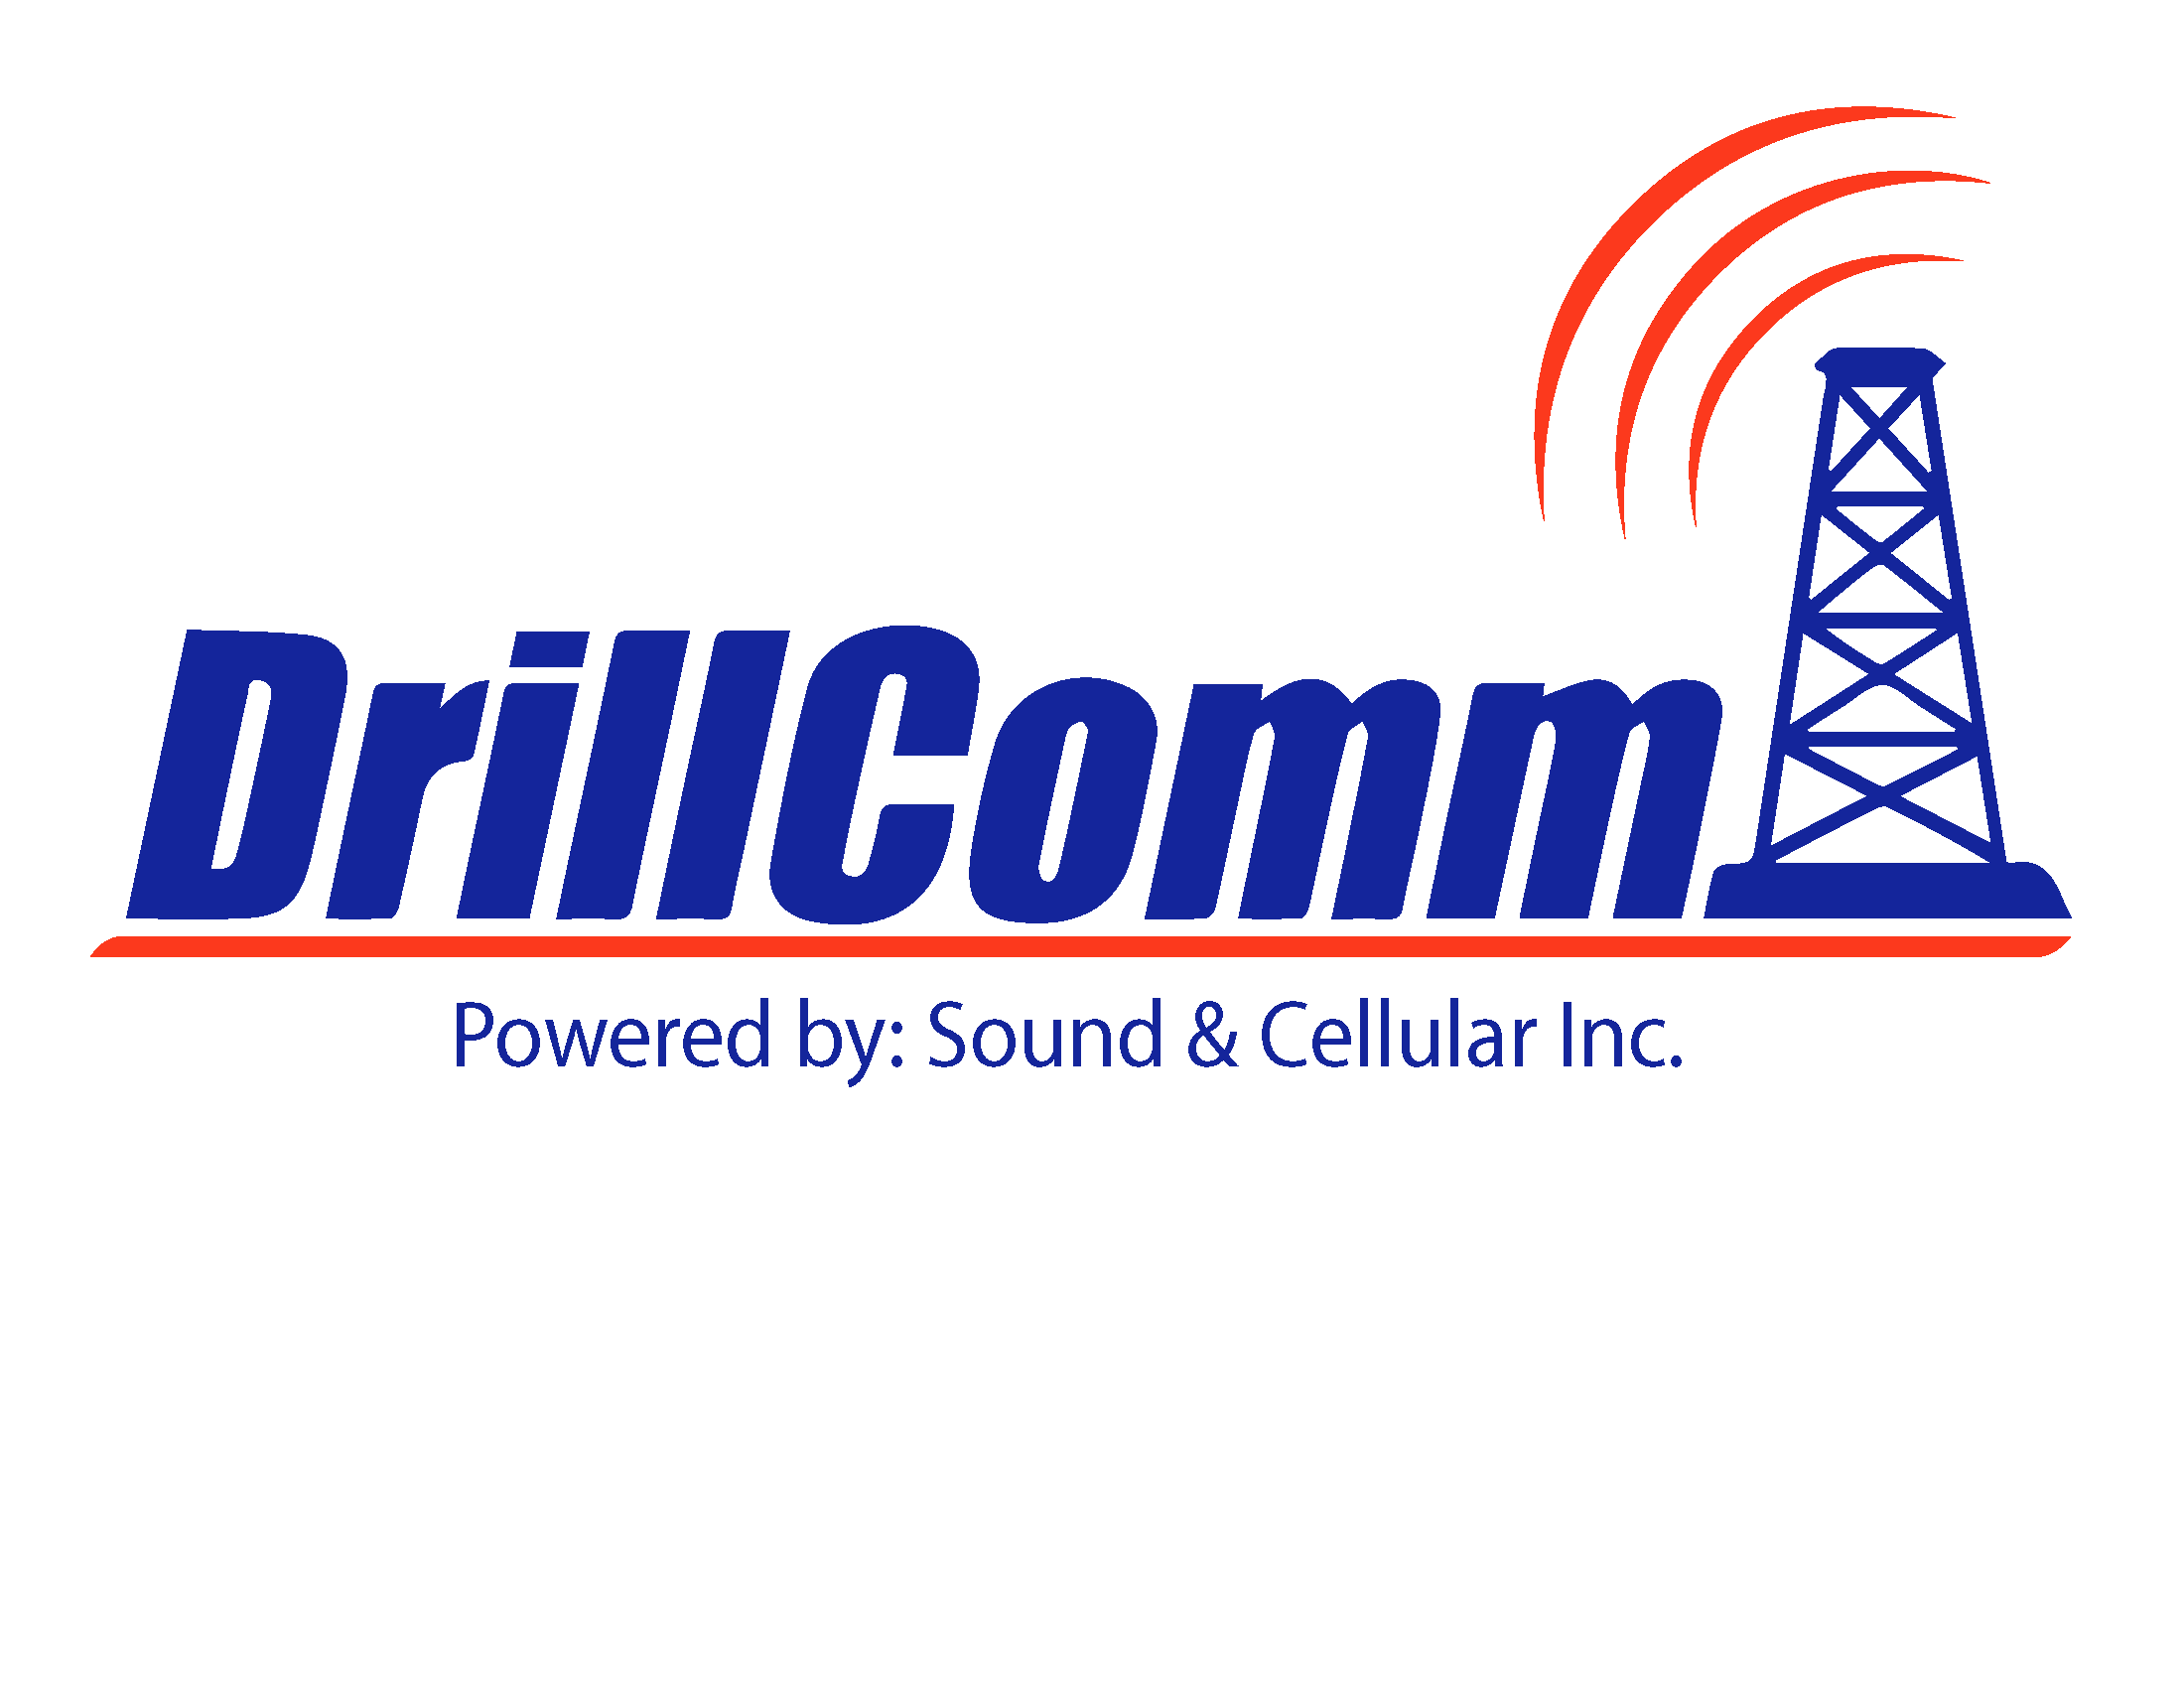 Drill Comm